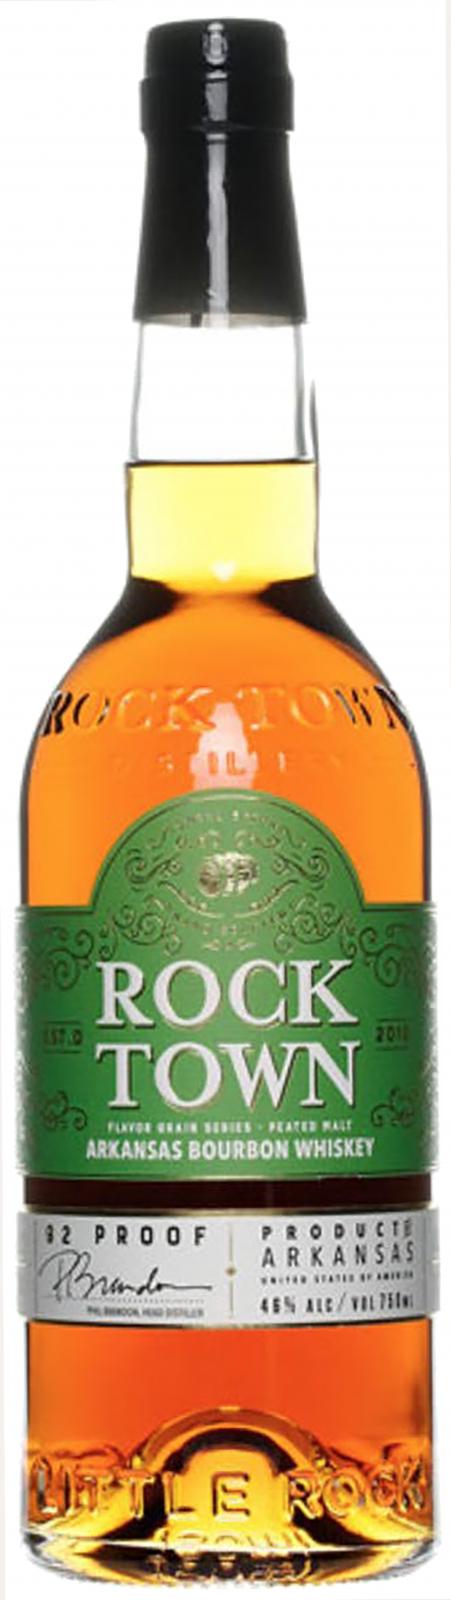 Rock Town Arkansas Bourbon Whisky Flavor Grain Series Peated Malt 46% 700ml